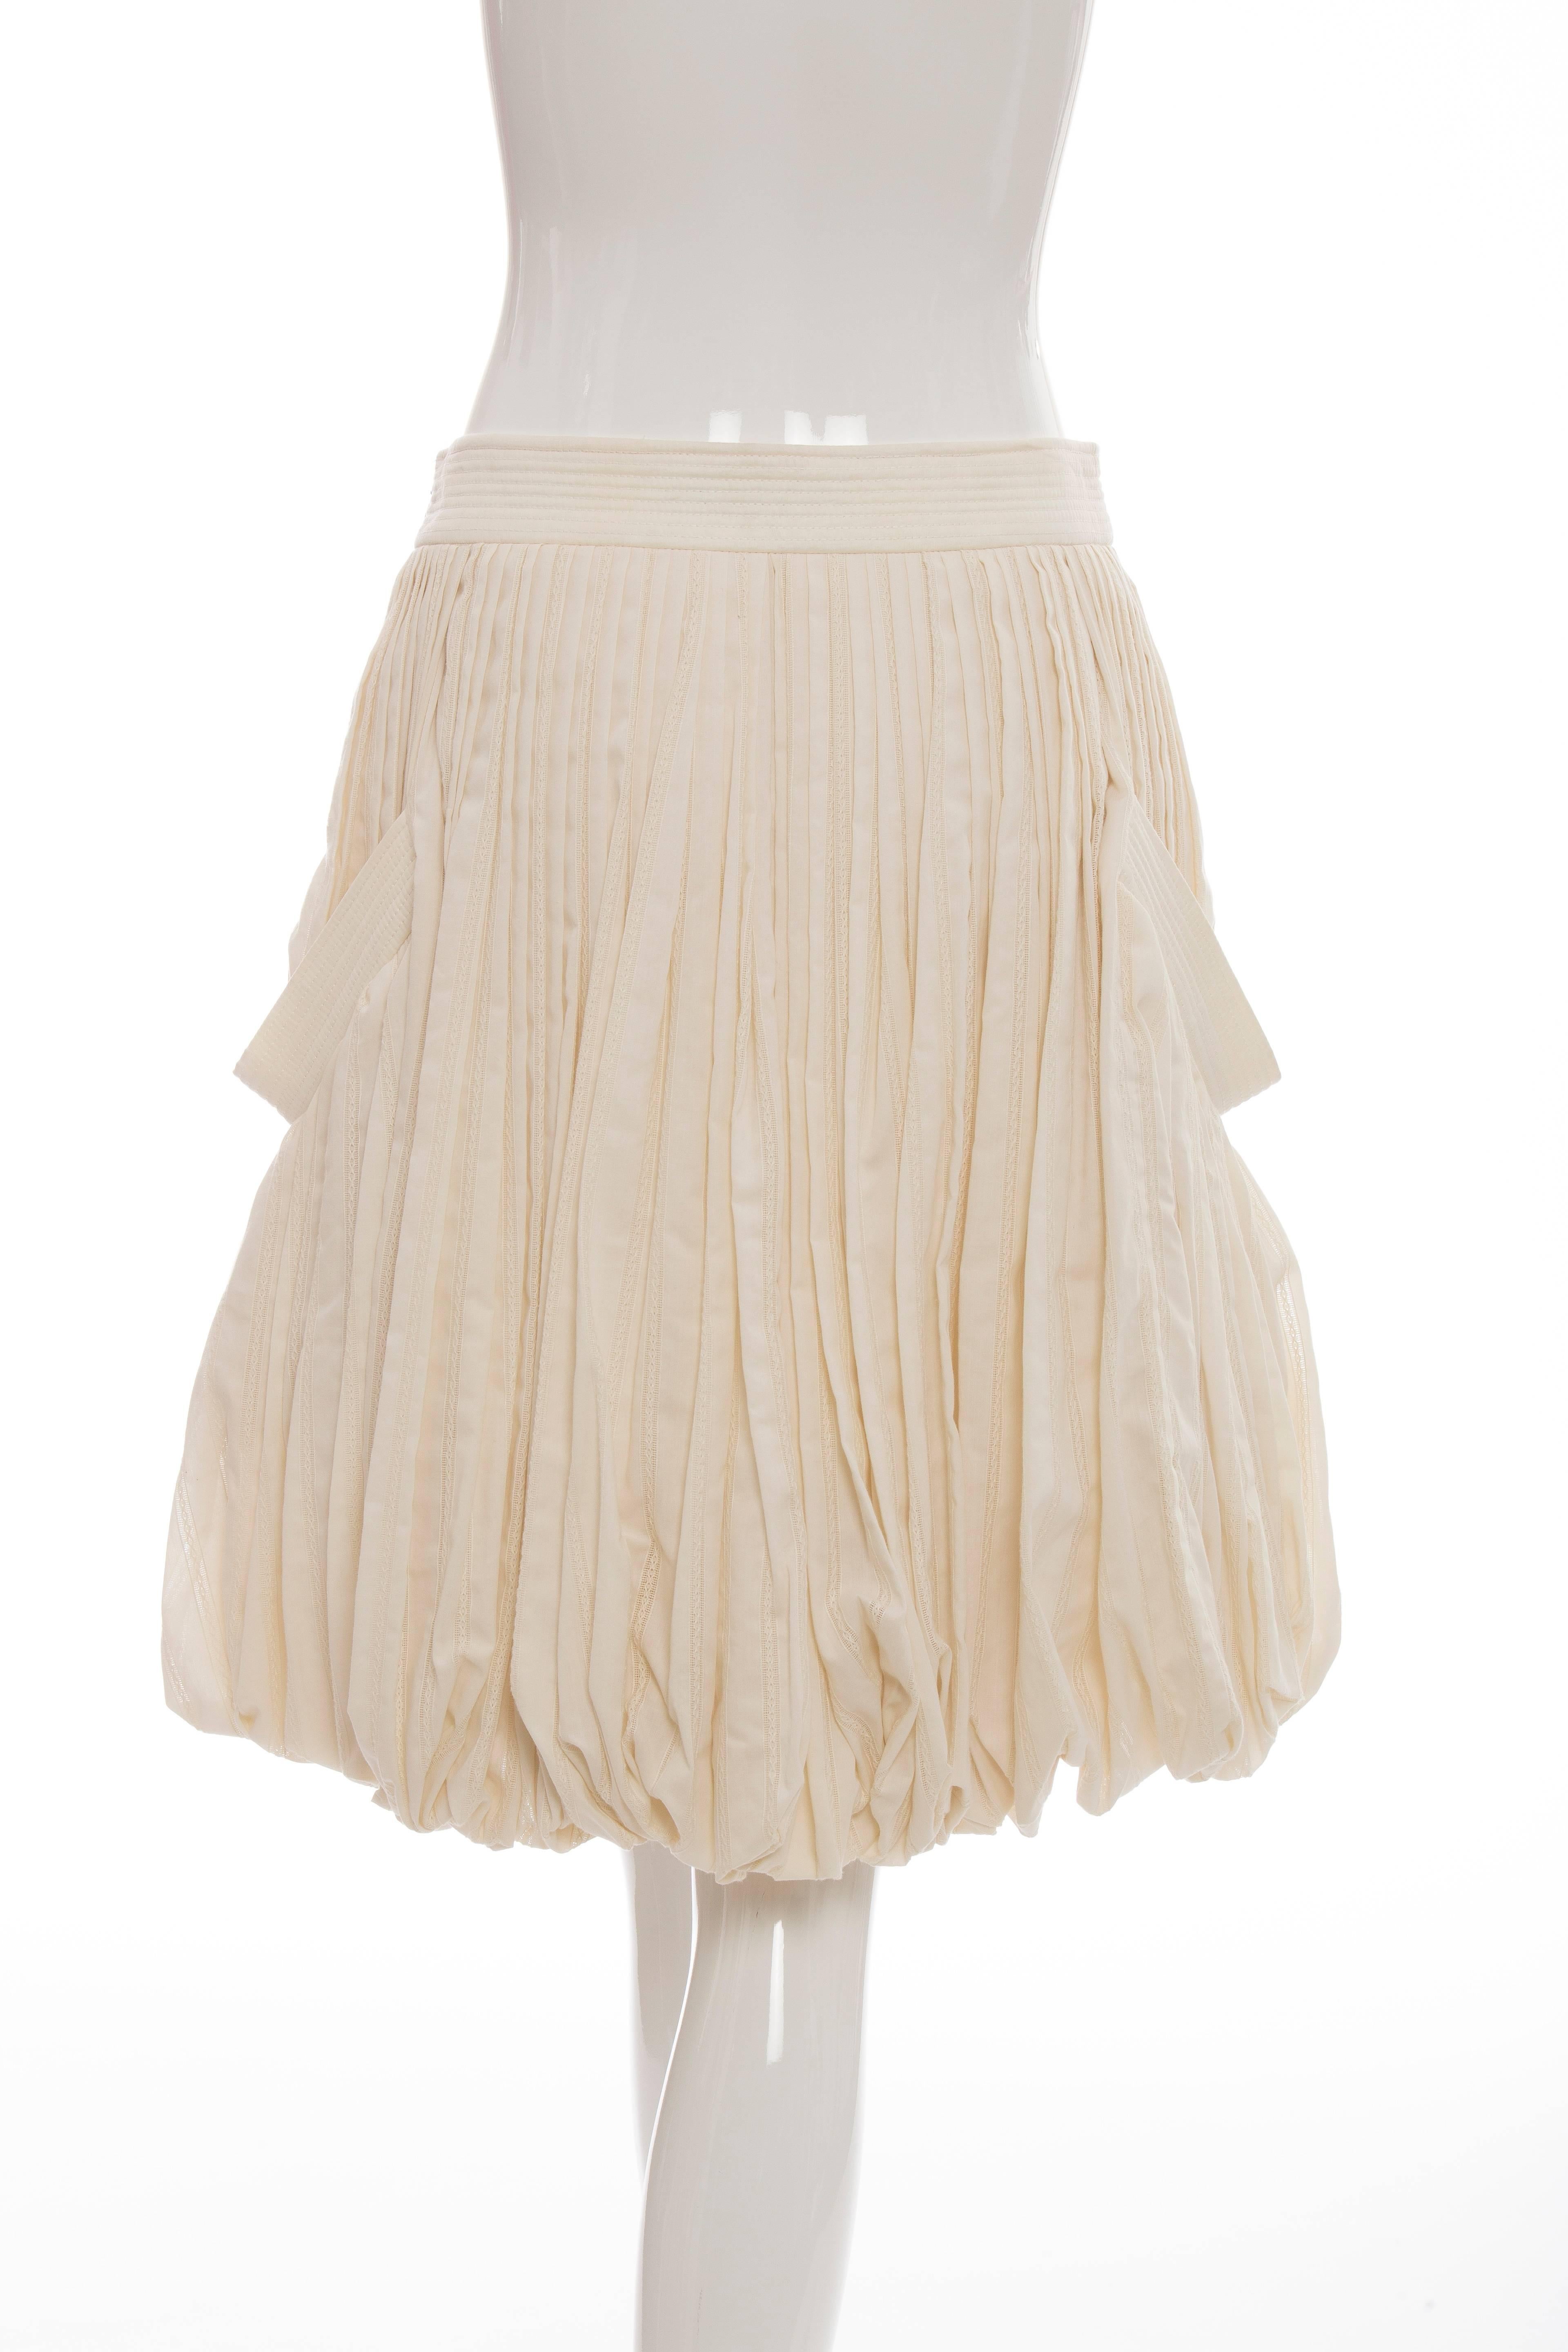 Women's Alexander McQueen Cream Pleated Cotton Skirt Two Deep Pockets, Spring 2006